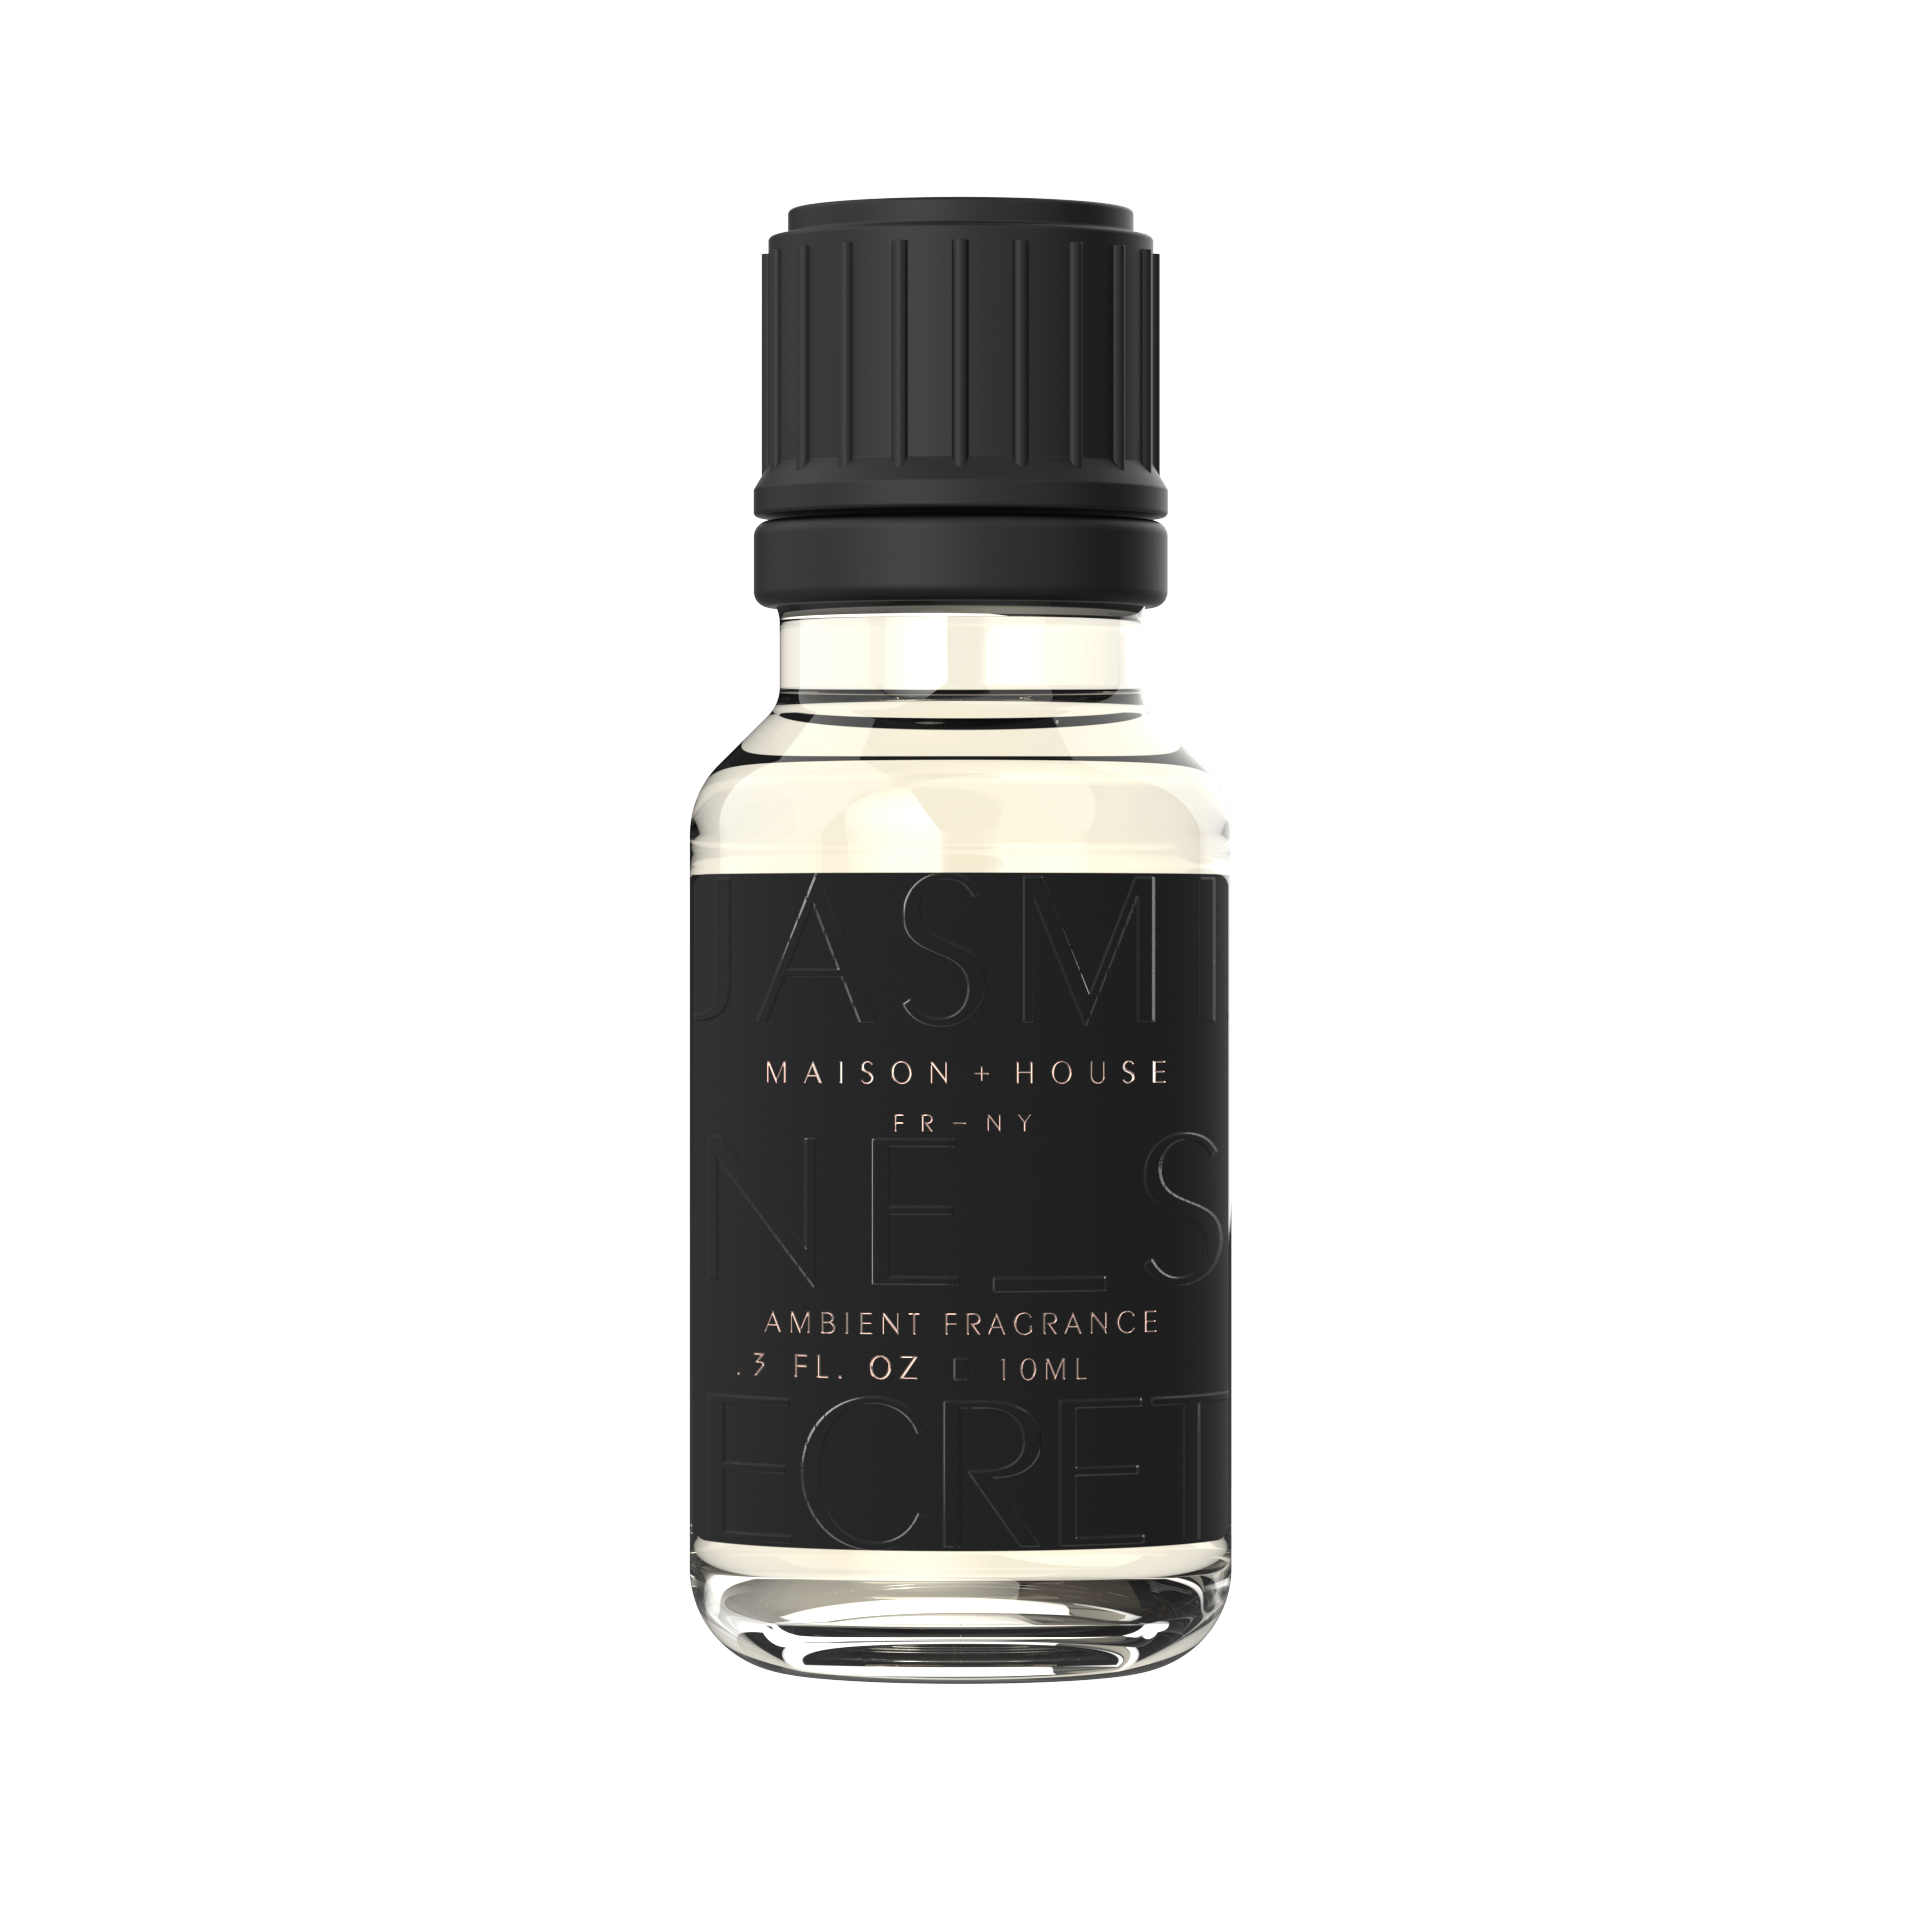 Maison+House Secret Jasmine French Ambient Fragrance